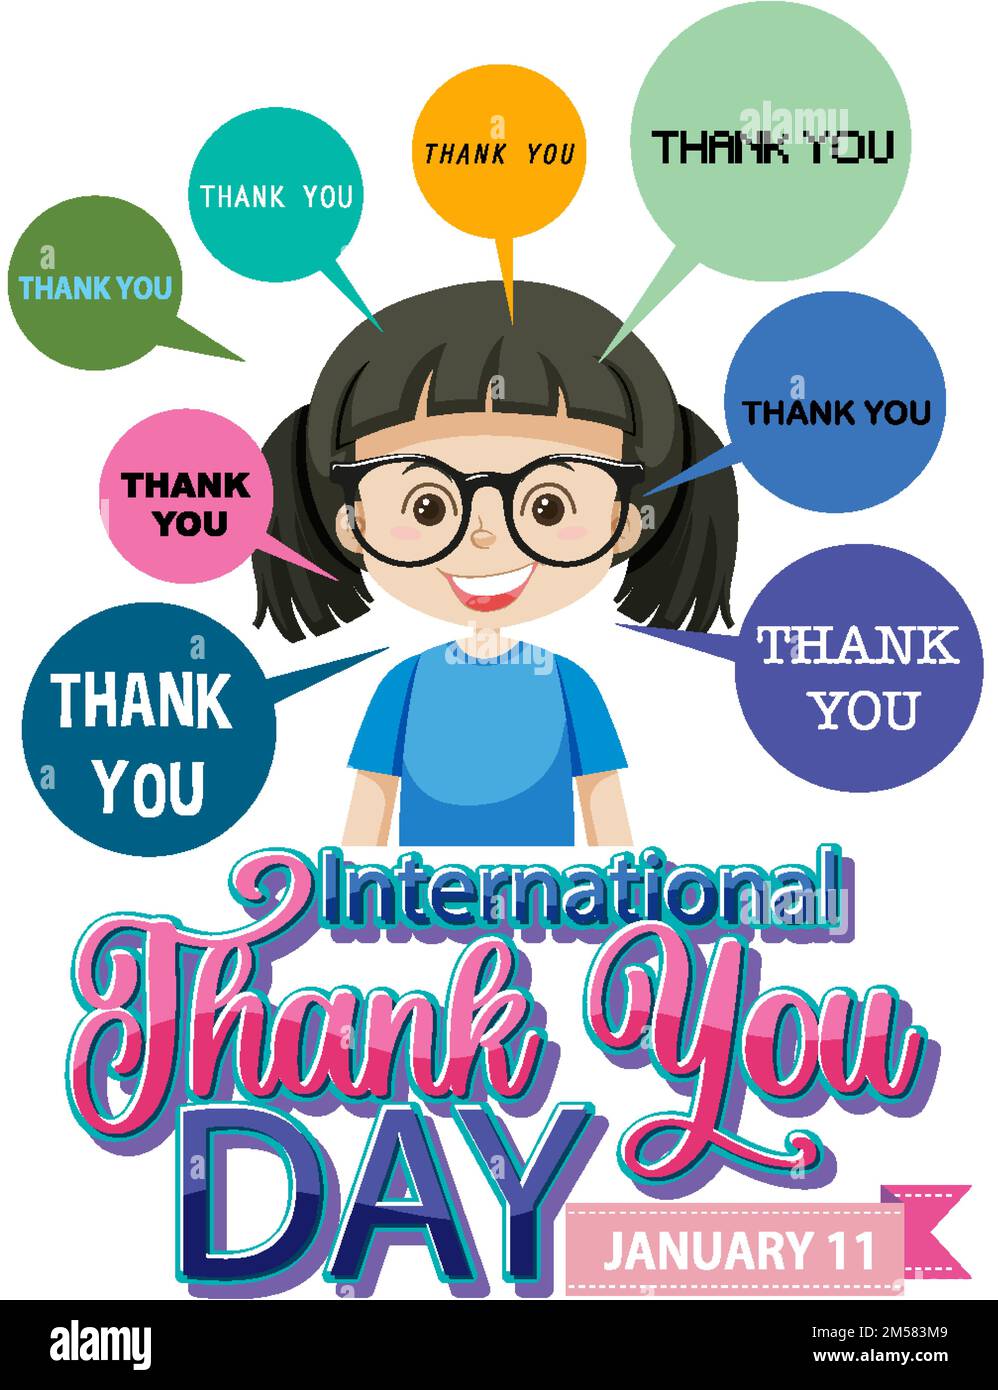 International Thank You Day Banner Design illustration Stock Vector